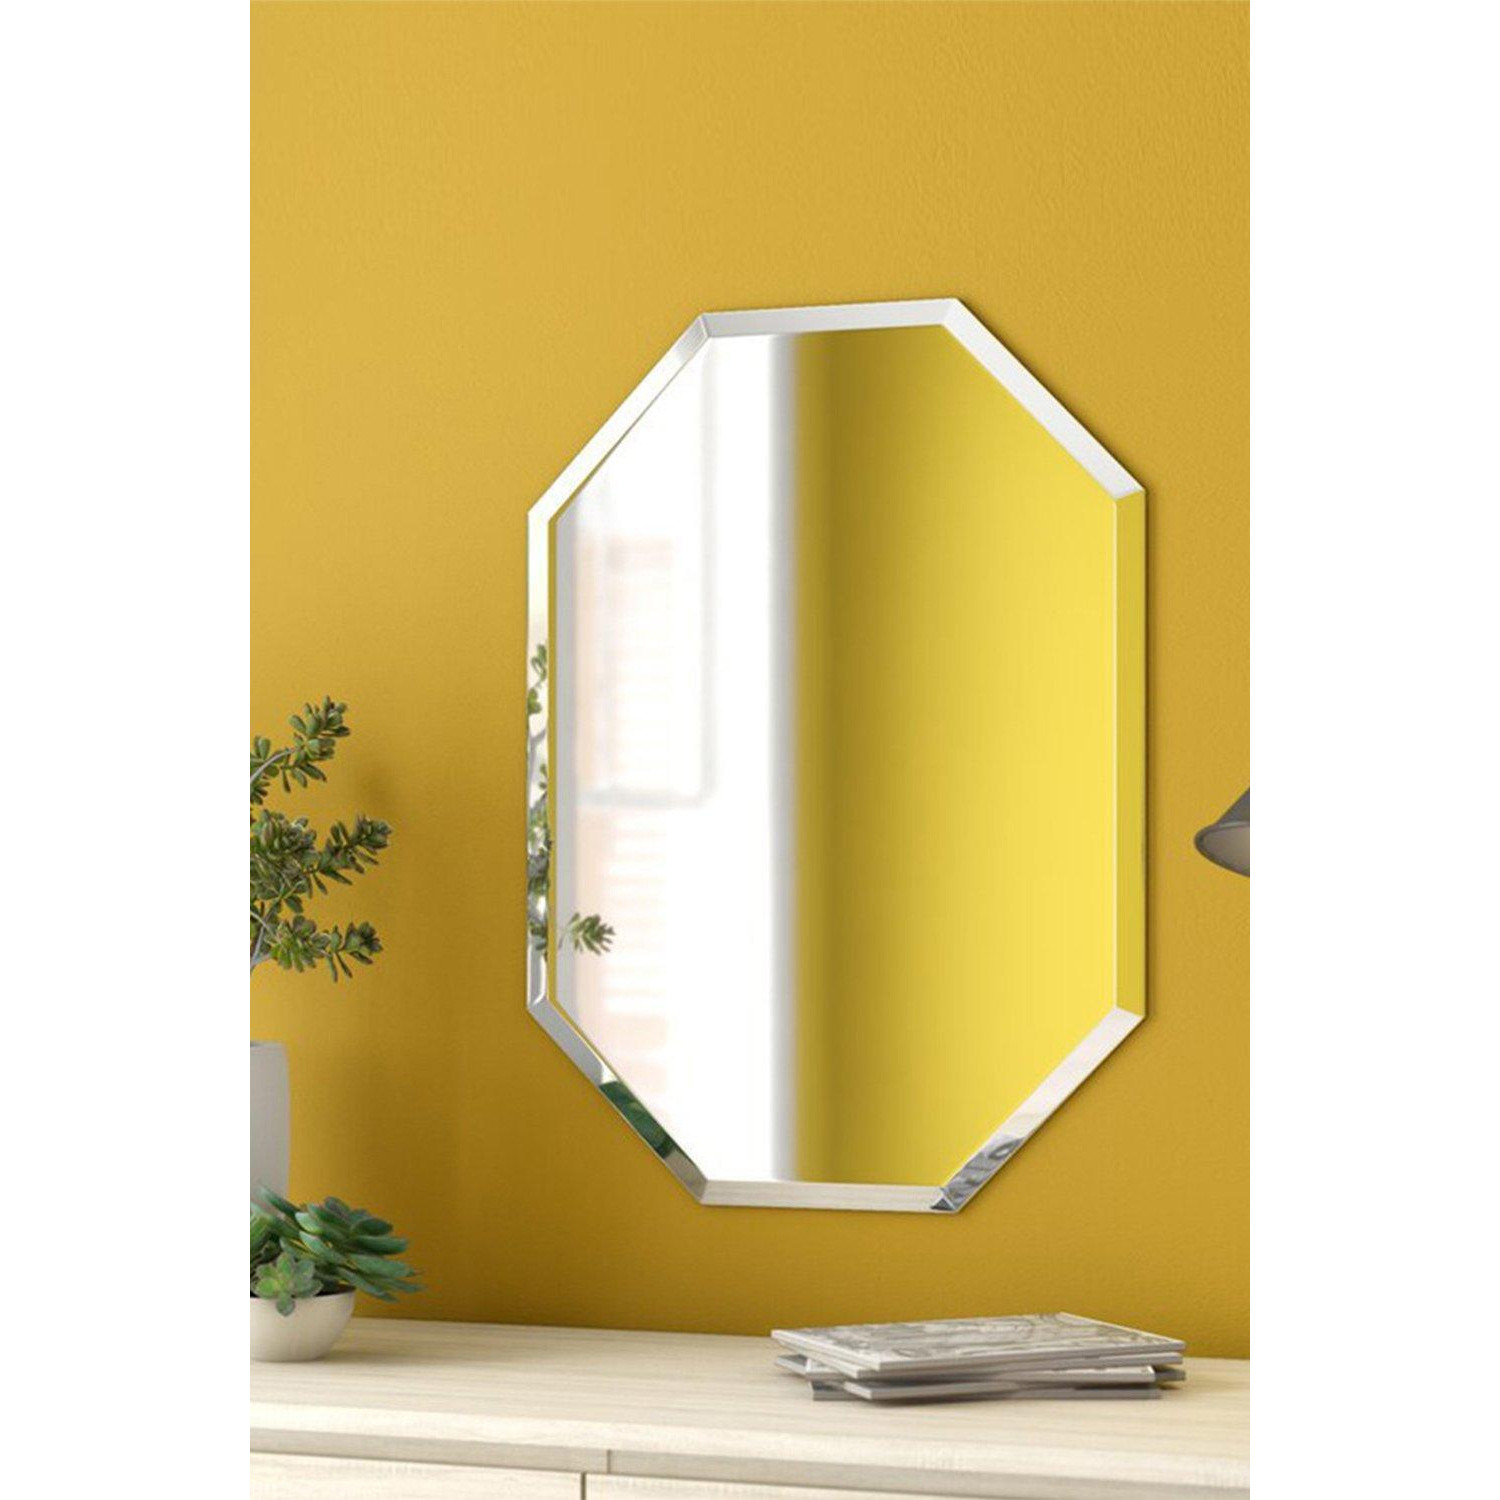 40cm W x 60cm H Modern Frameless Octagon Wall Mirror - image 1